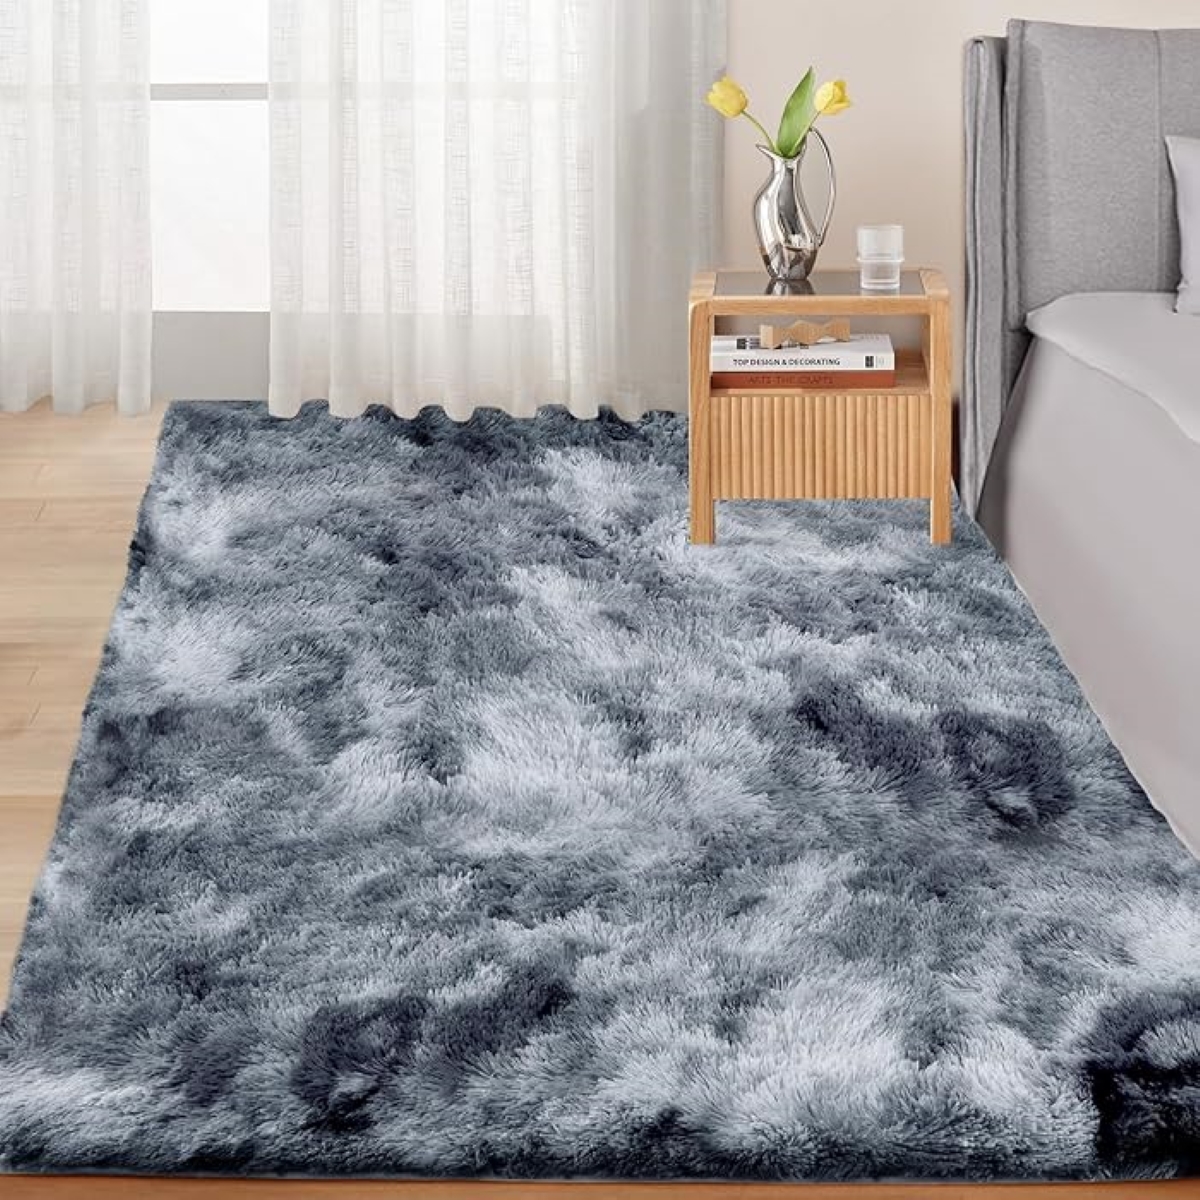 Gray fluffy area rug in bedroom.